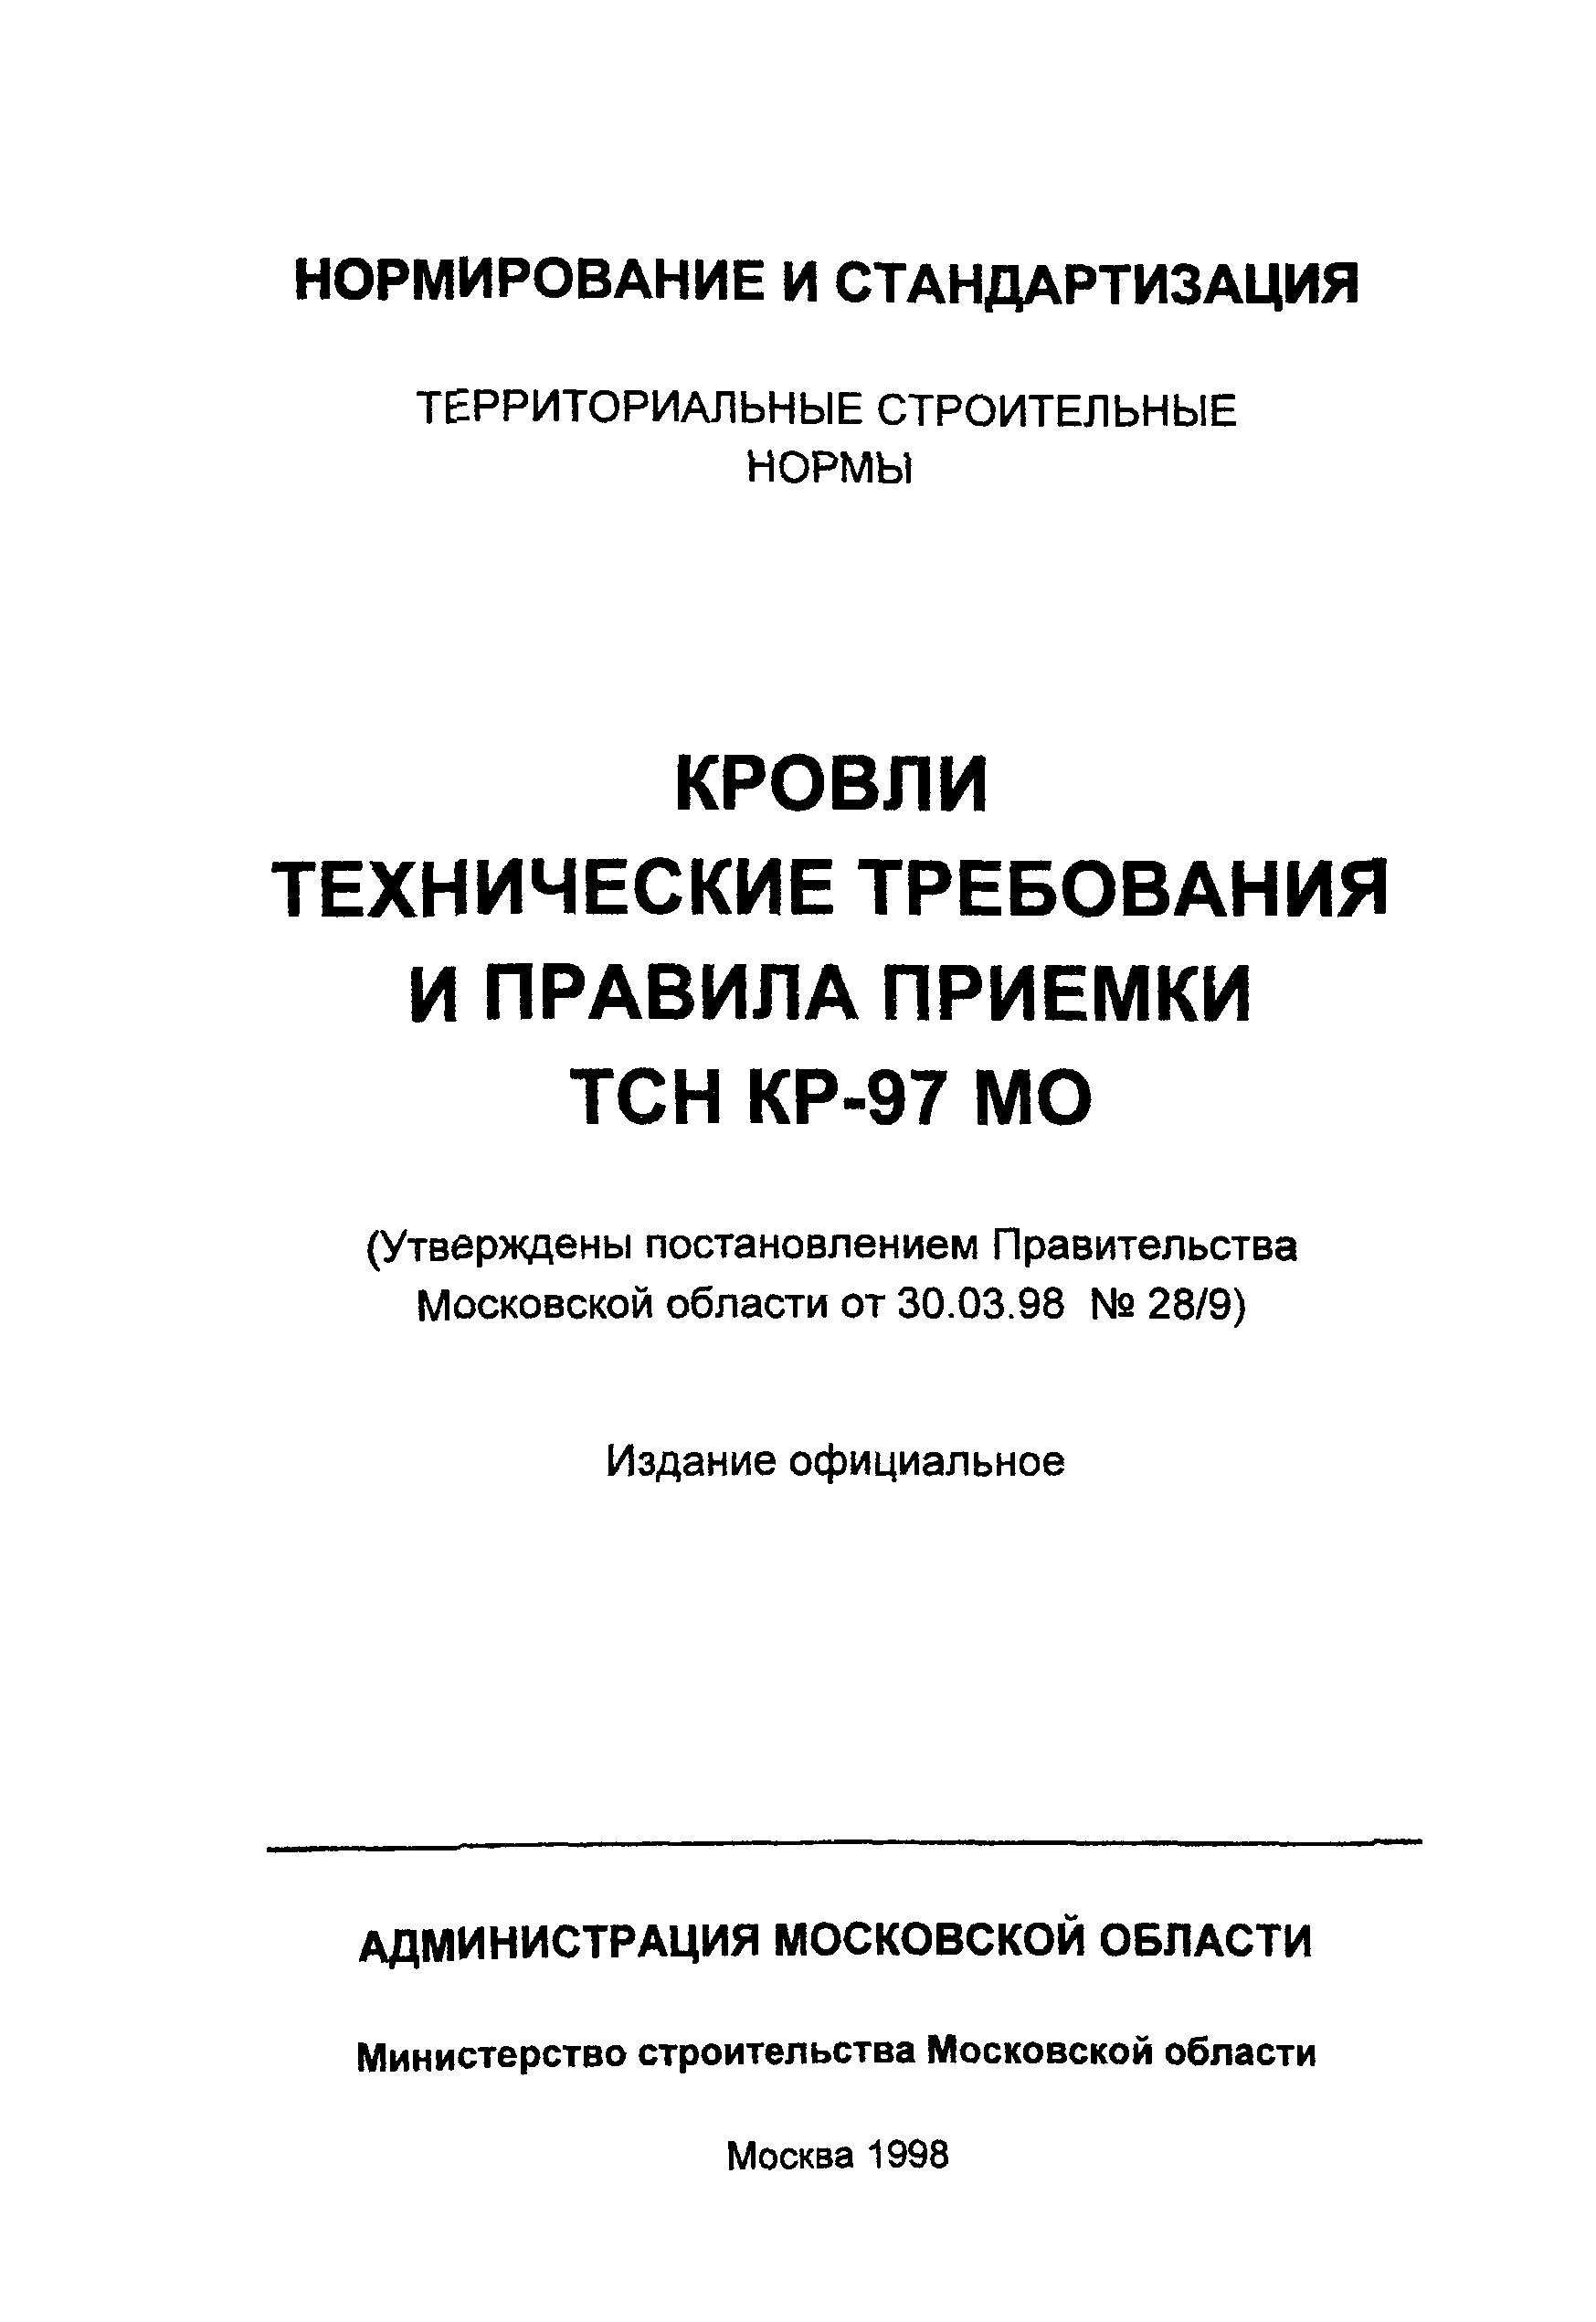 ТСН КР-97 МО